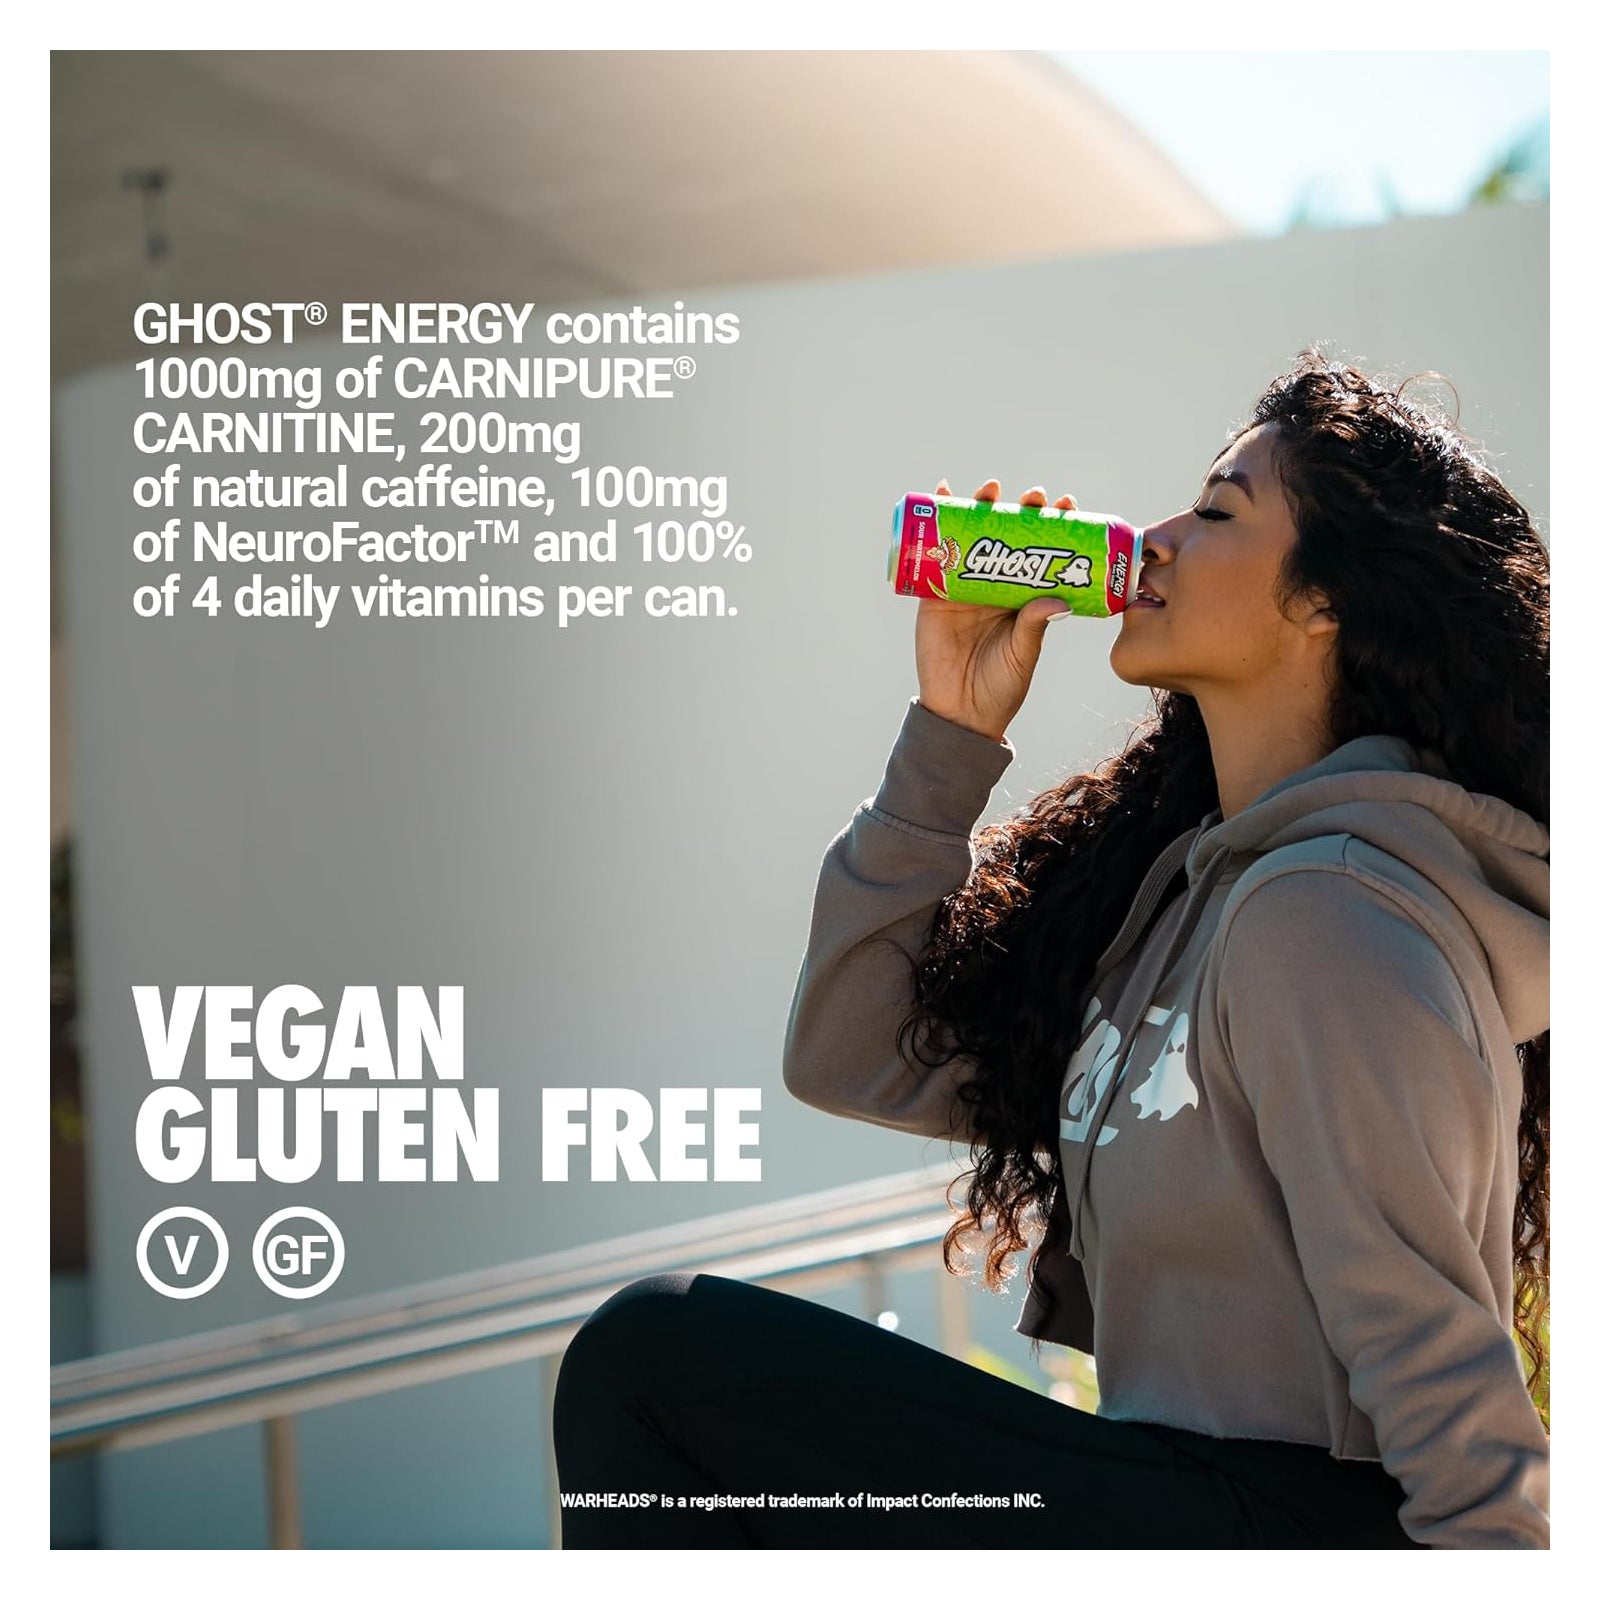 Ghost Free Energy Drink Warheads Sour Green Watermelon / 473ml